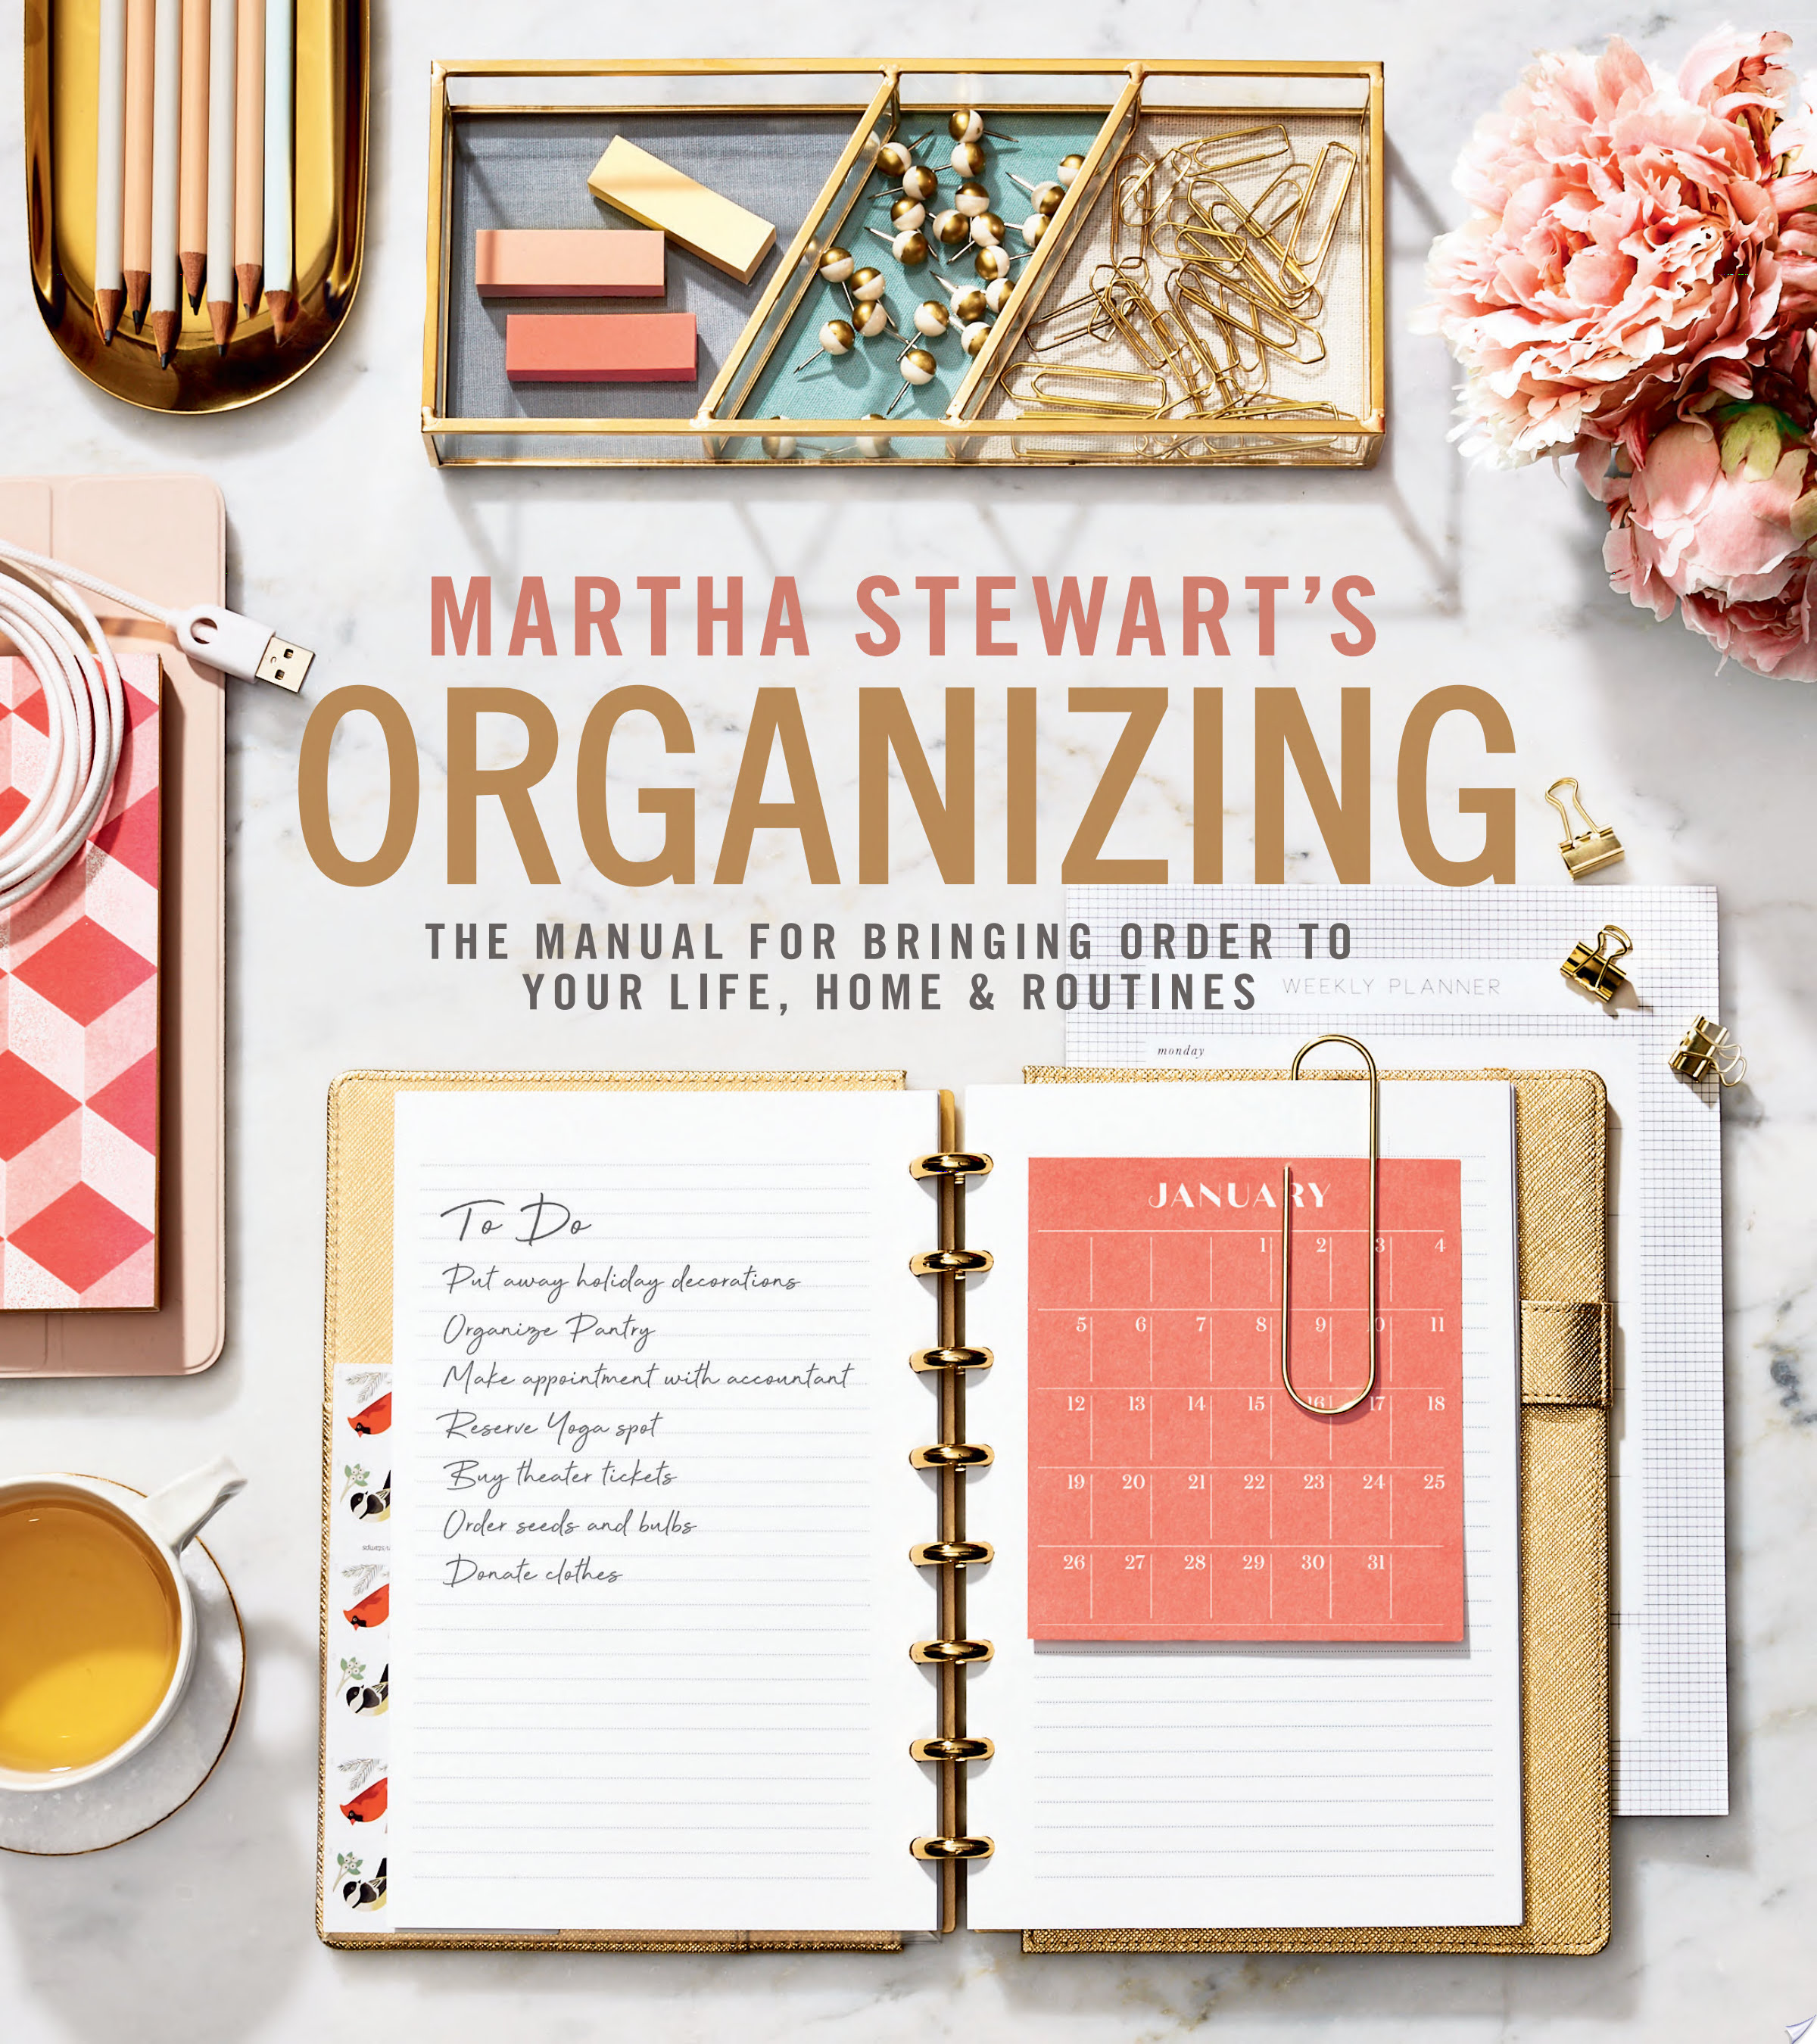 Image for "Martha Stewart&#039;s Organizing"